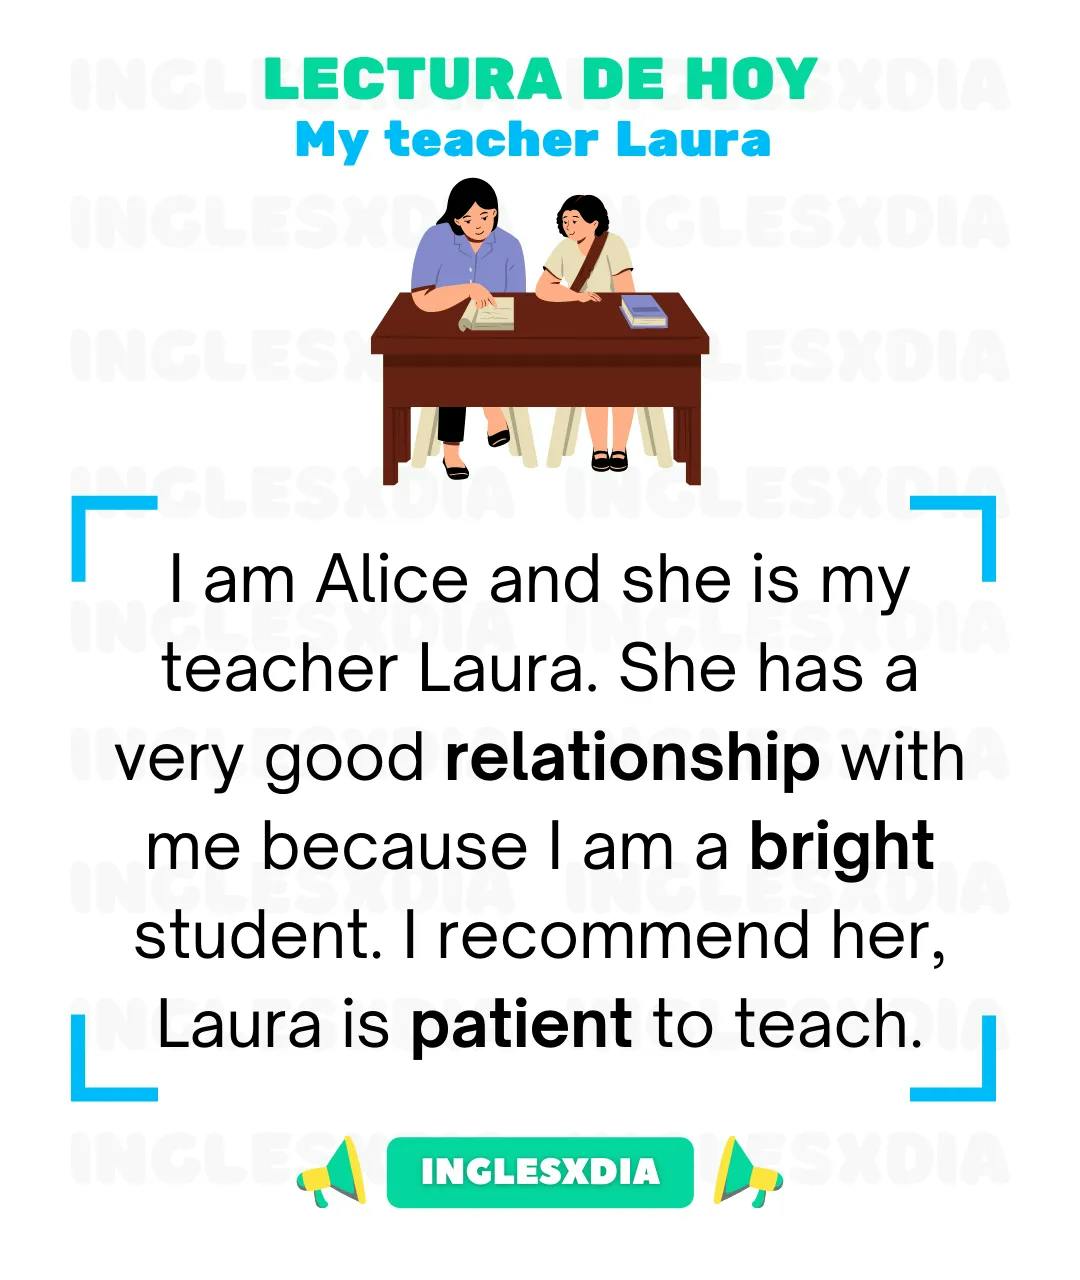 My teacher Laura